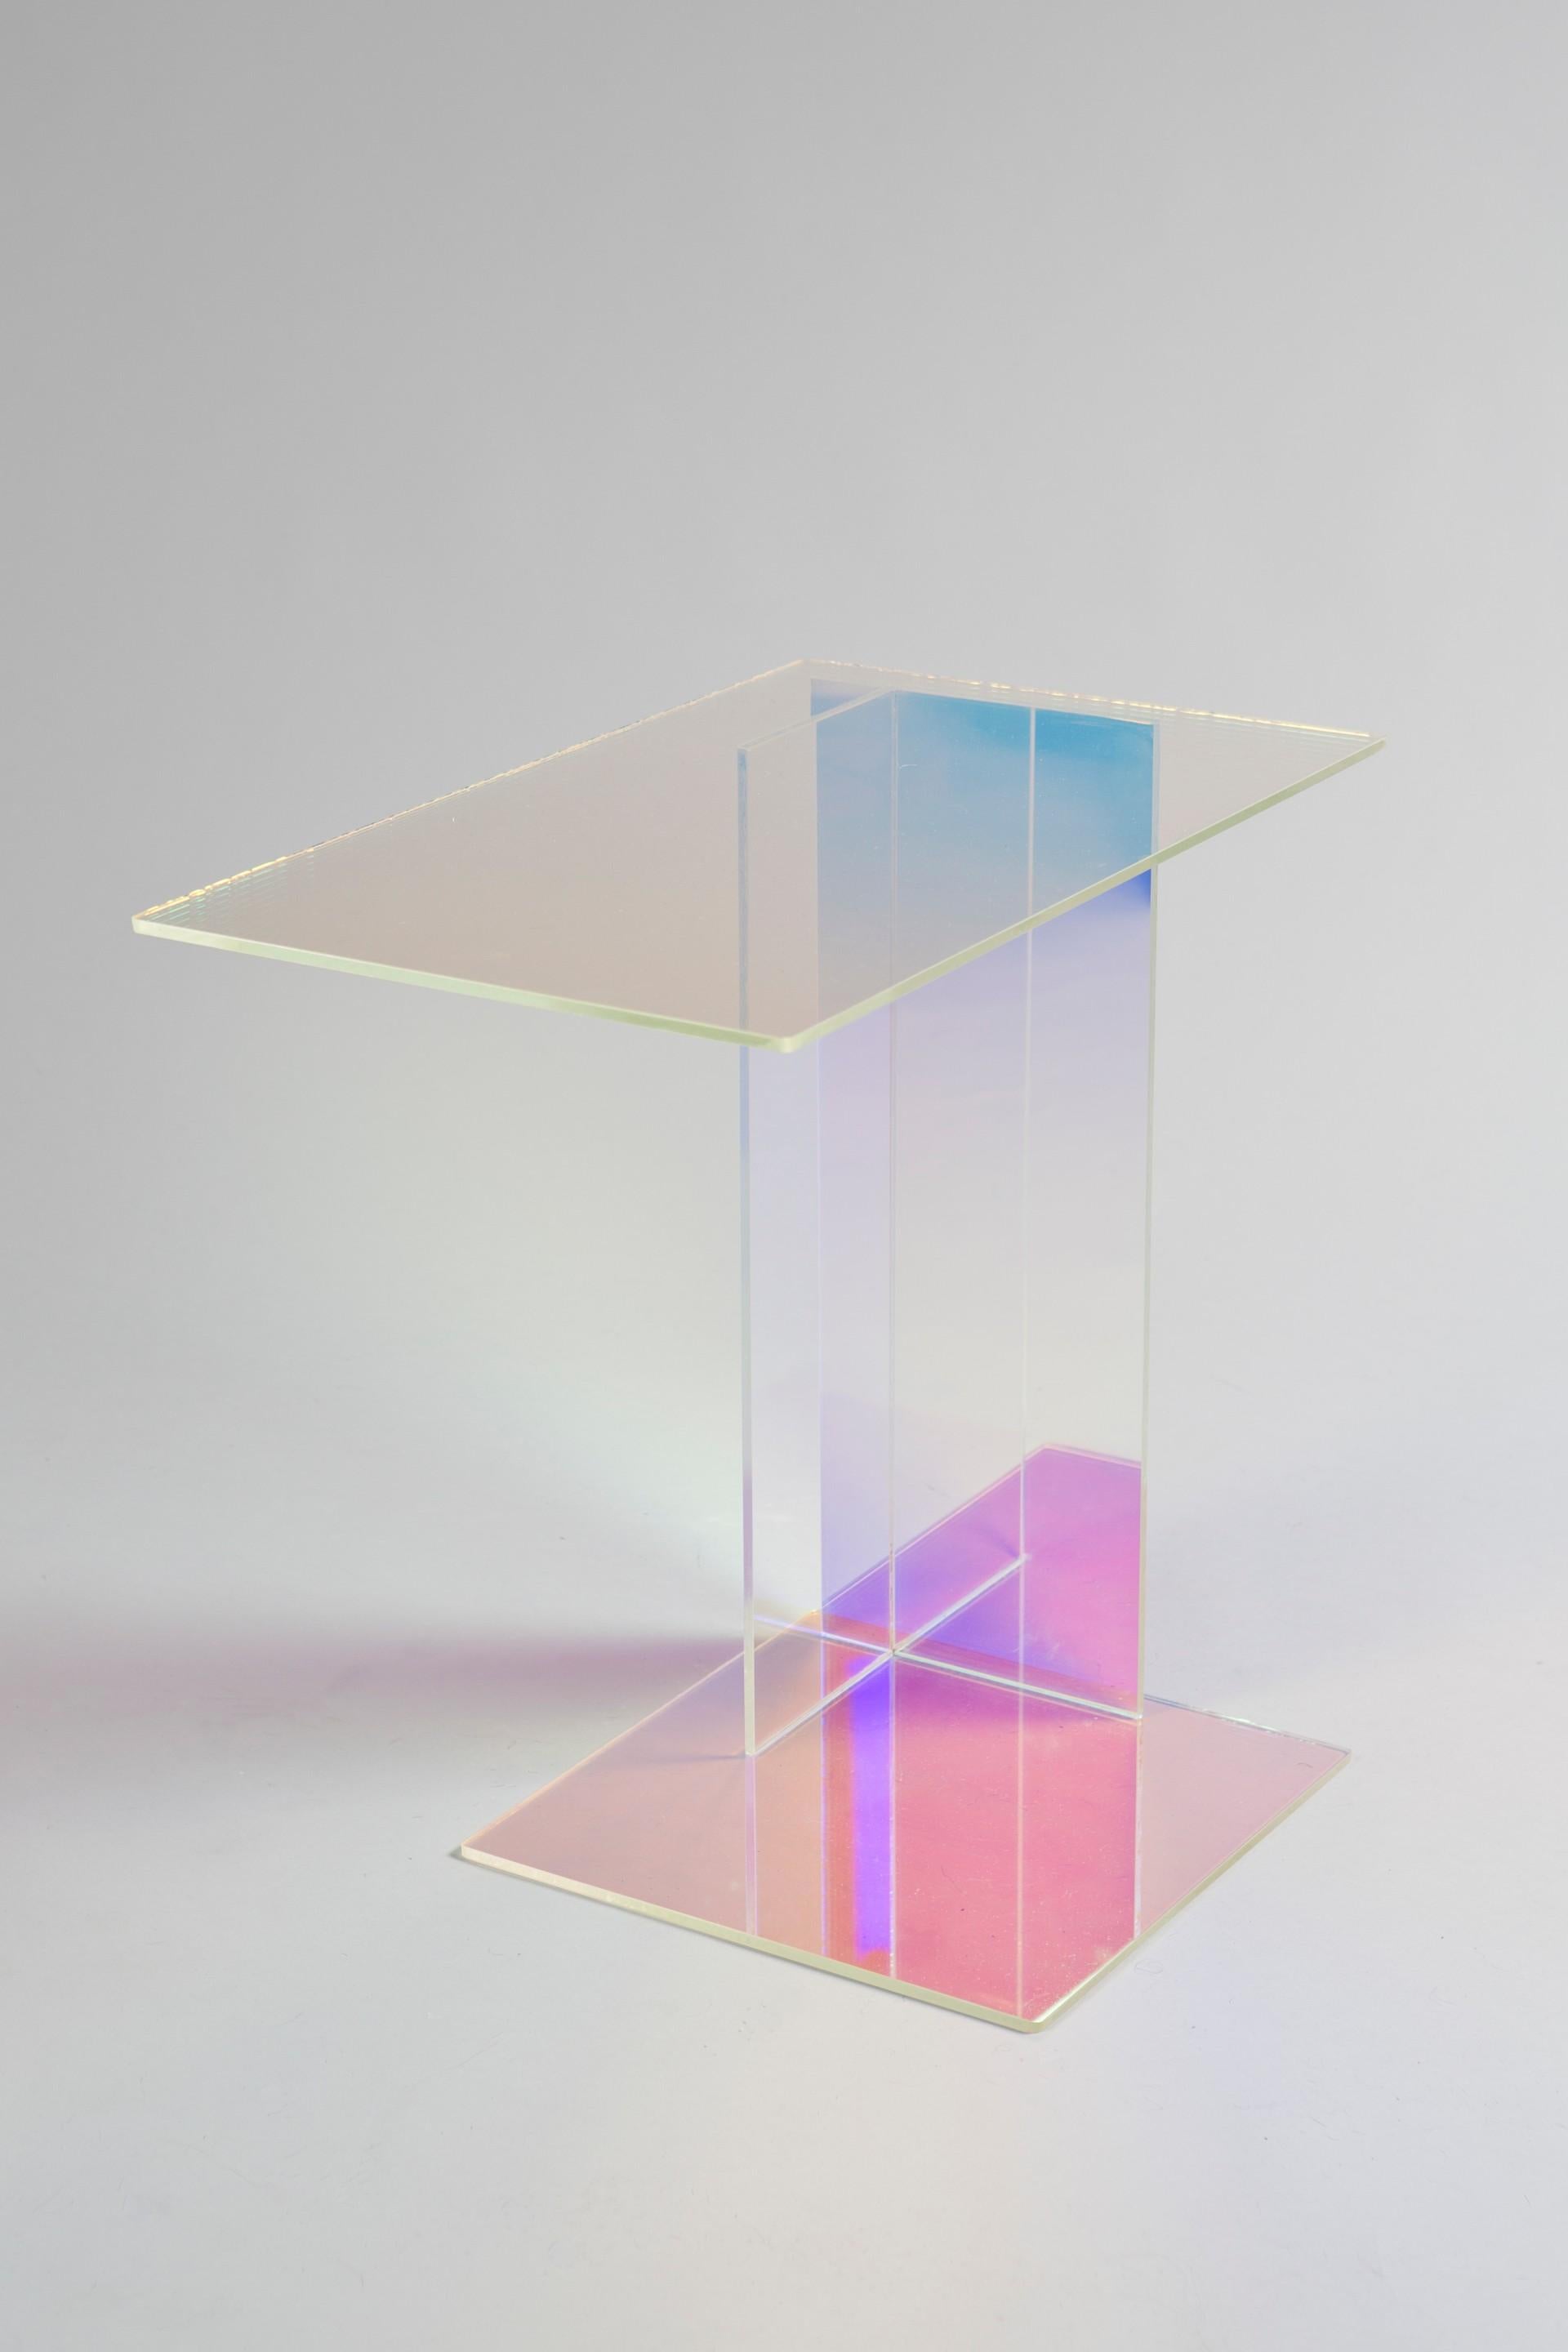 Dichroic side table, Rona Koblenz
Measures: 49 x 50 x 30 cm

